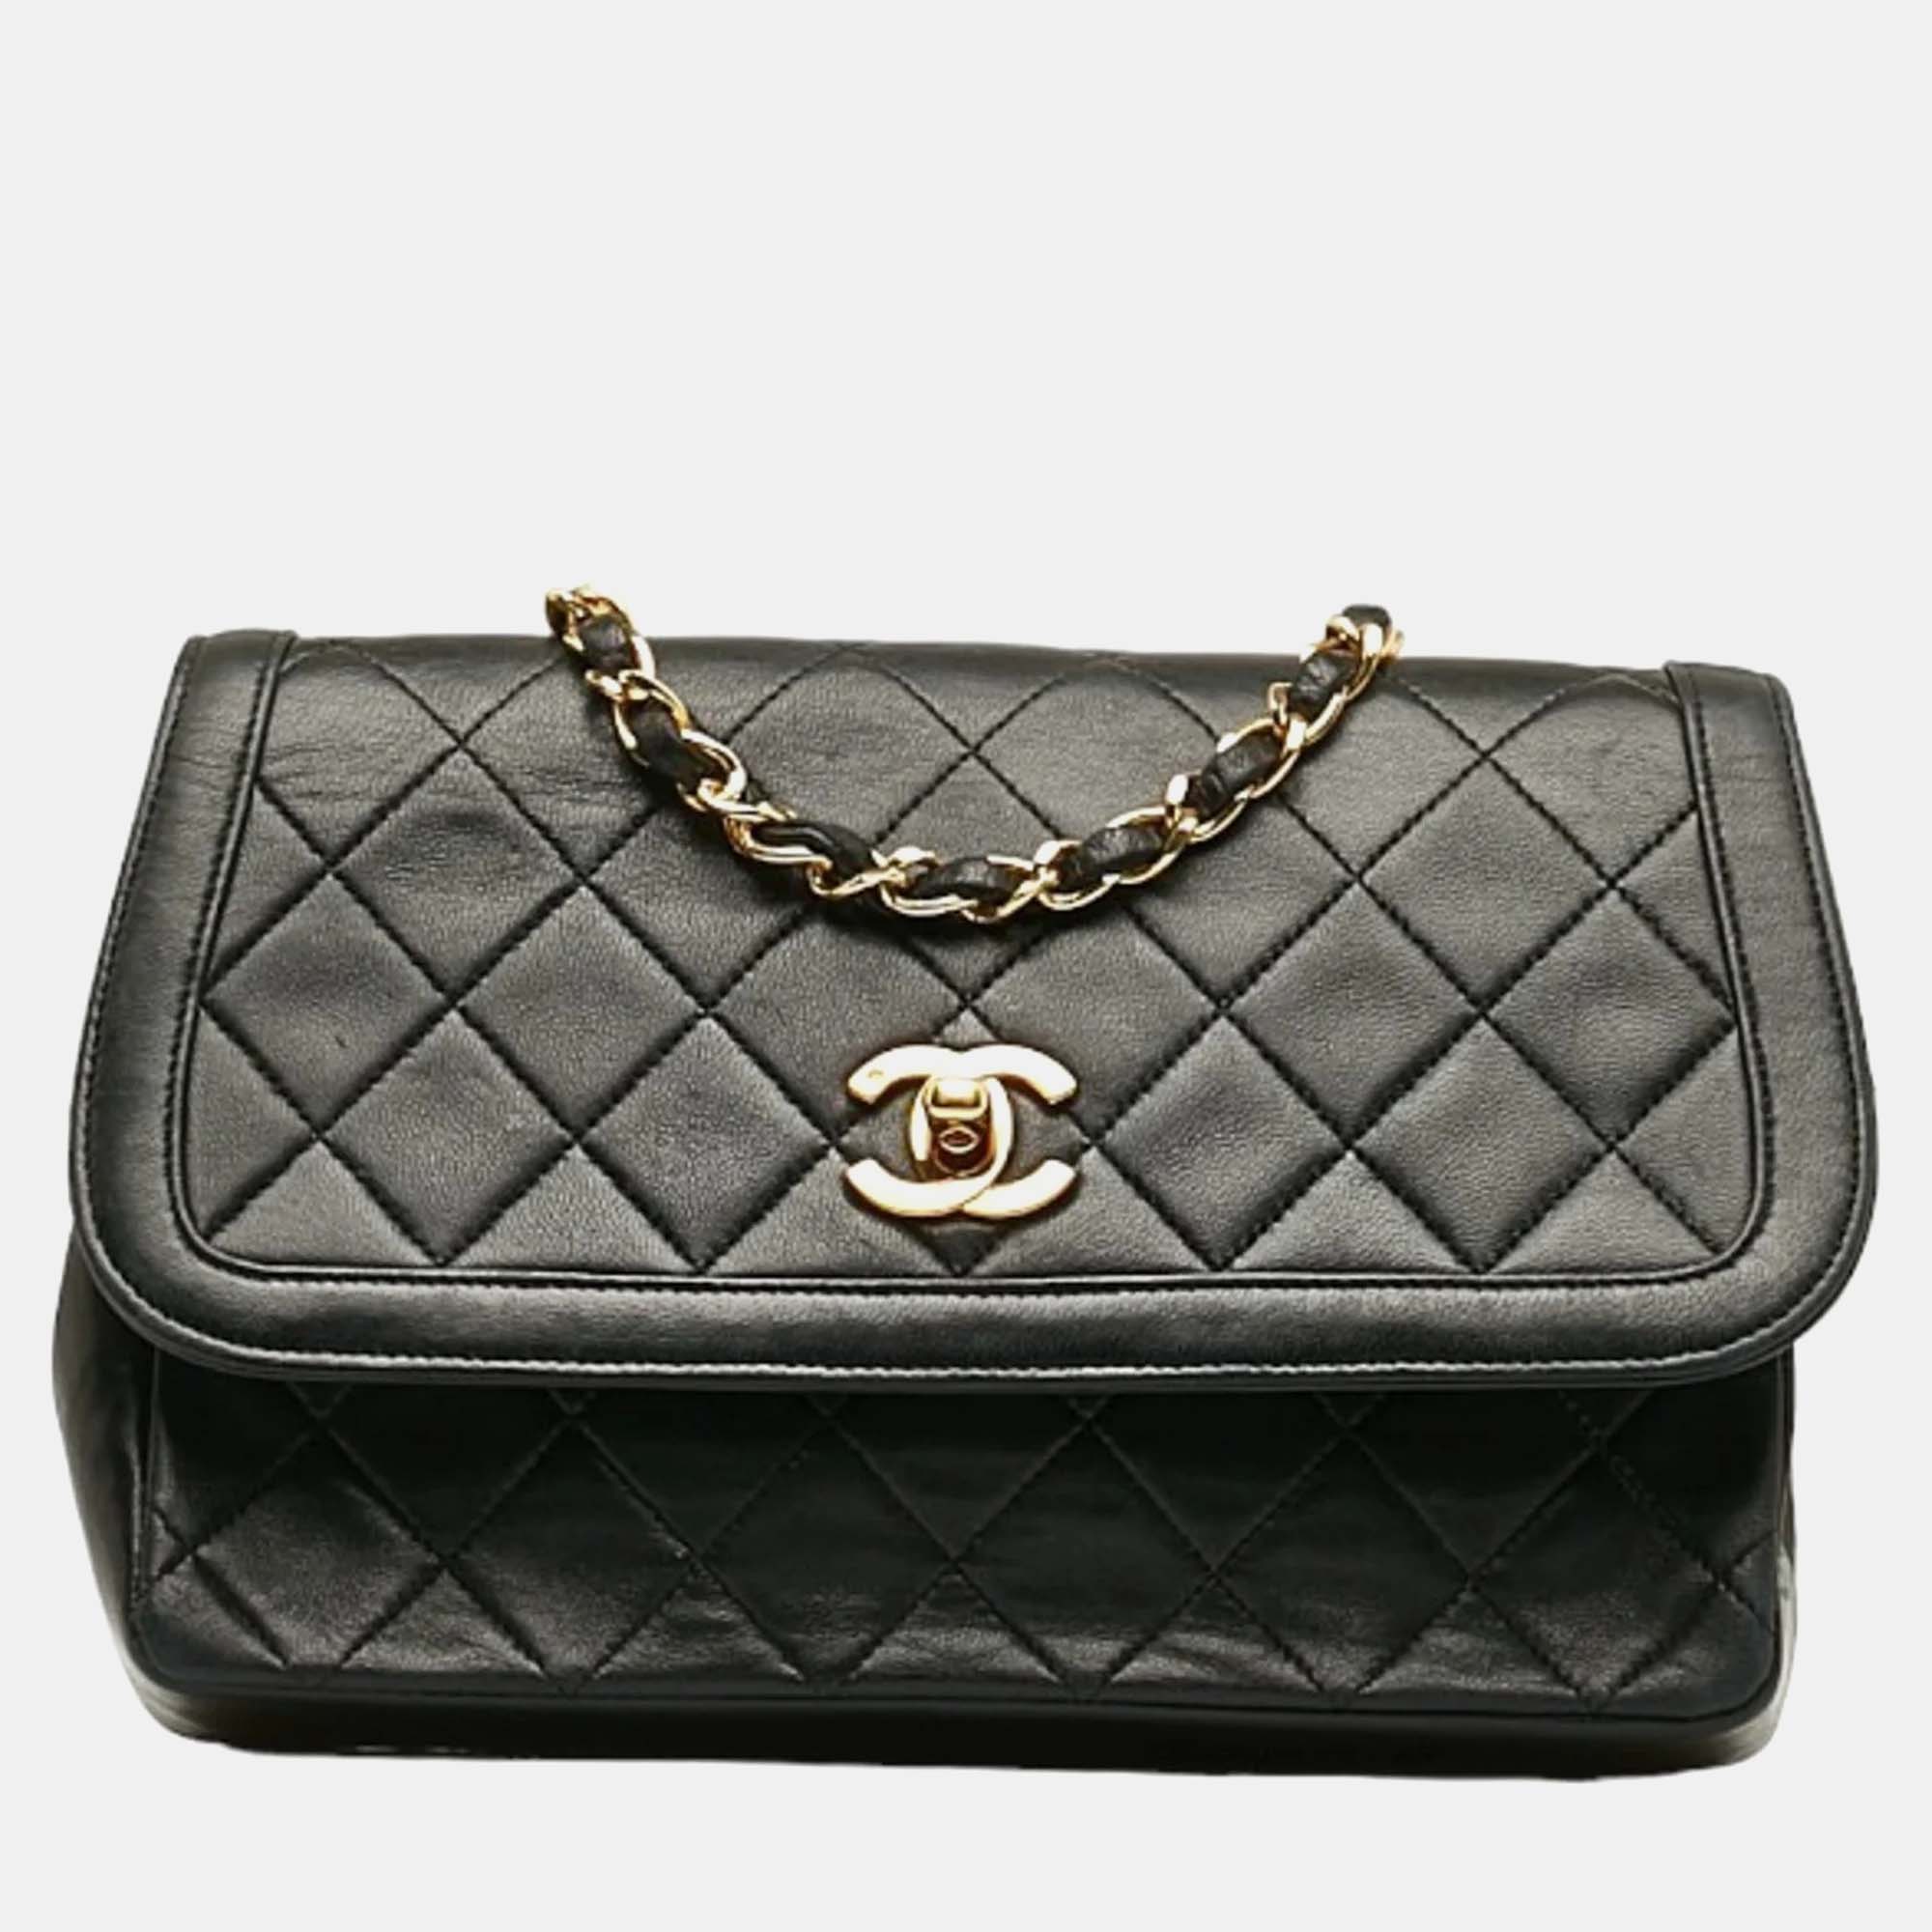 Chanel black quilted lambskin medium vintage flap bag